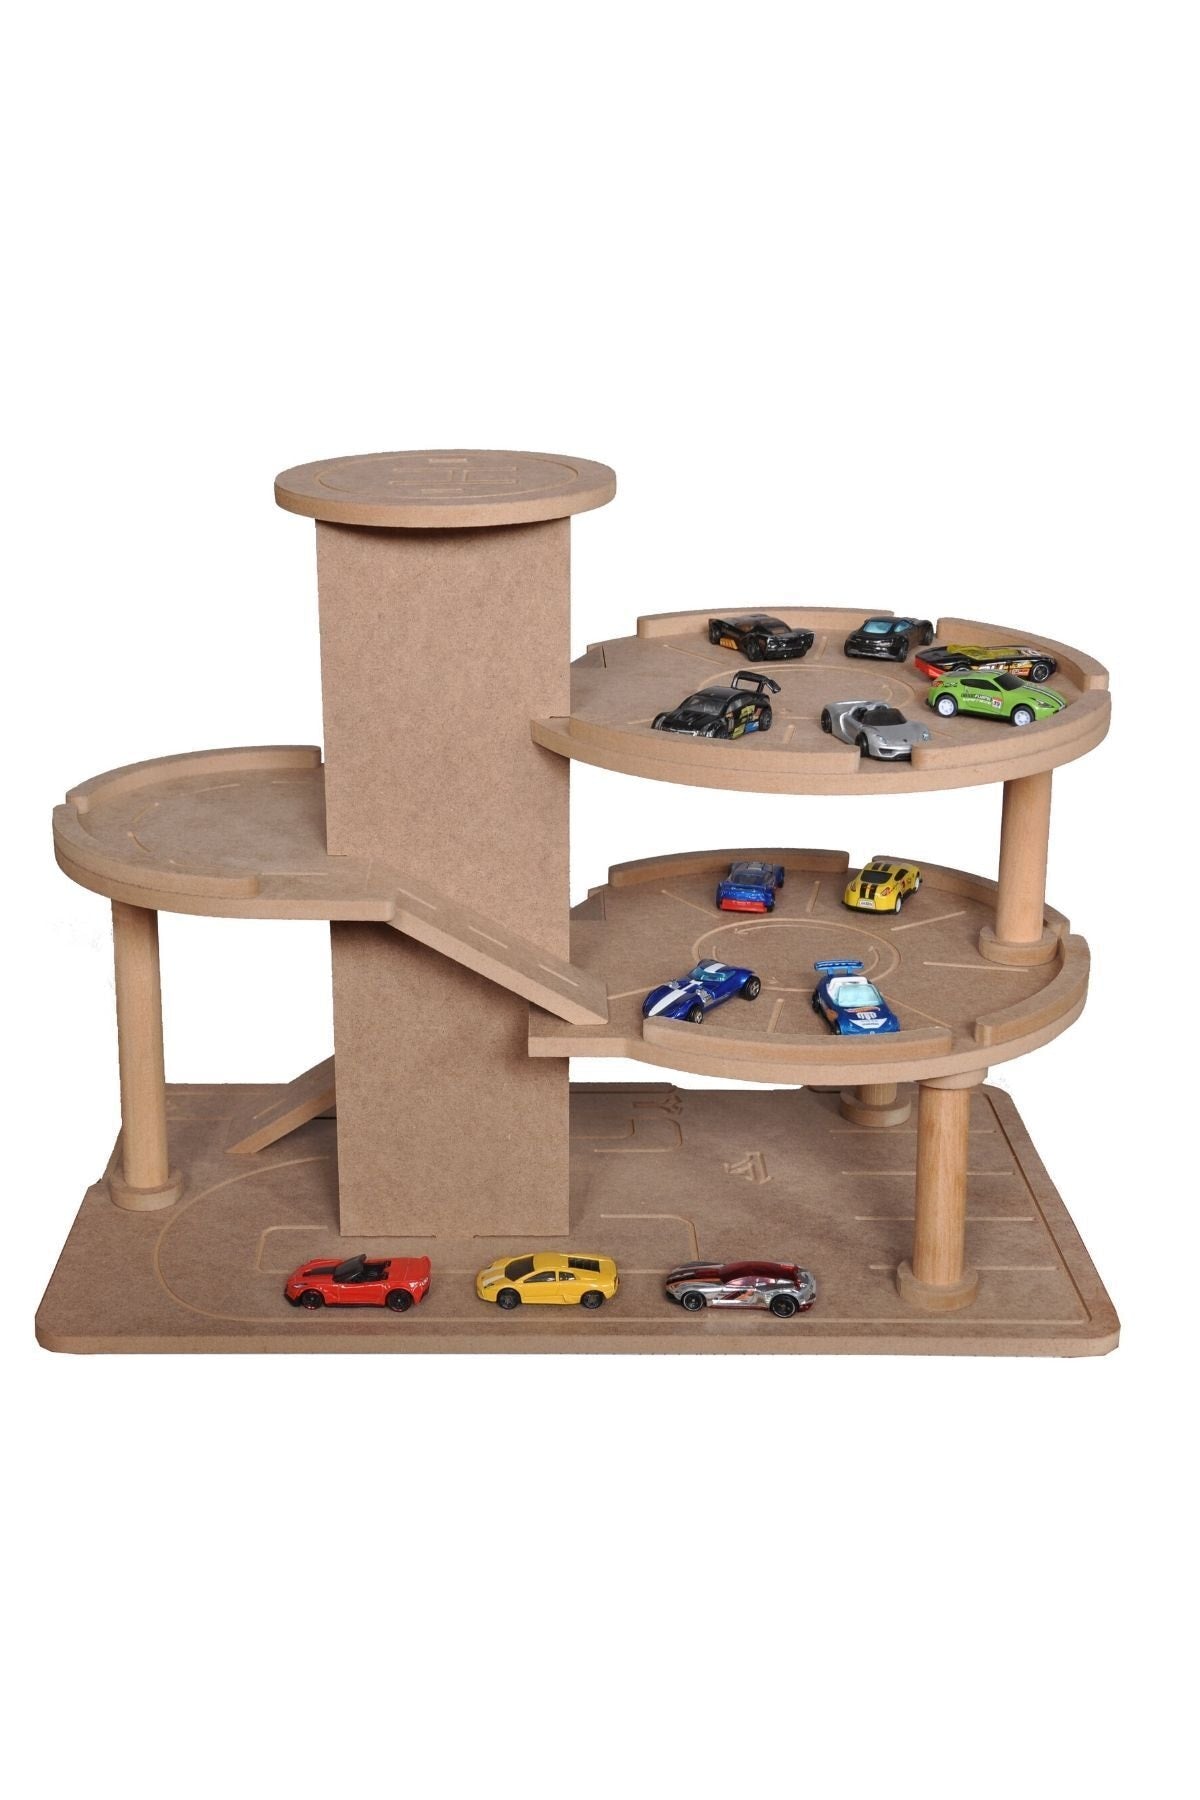 Wooden Floor Parking Garage Toy